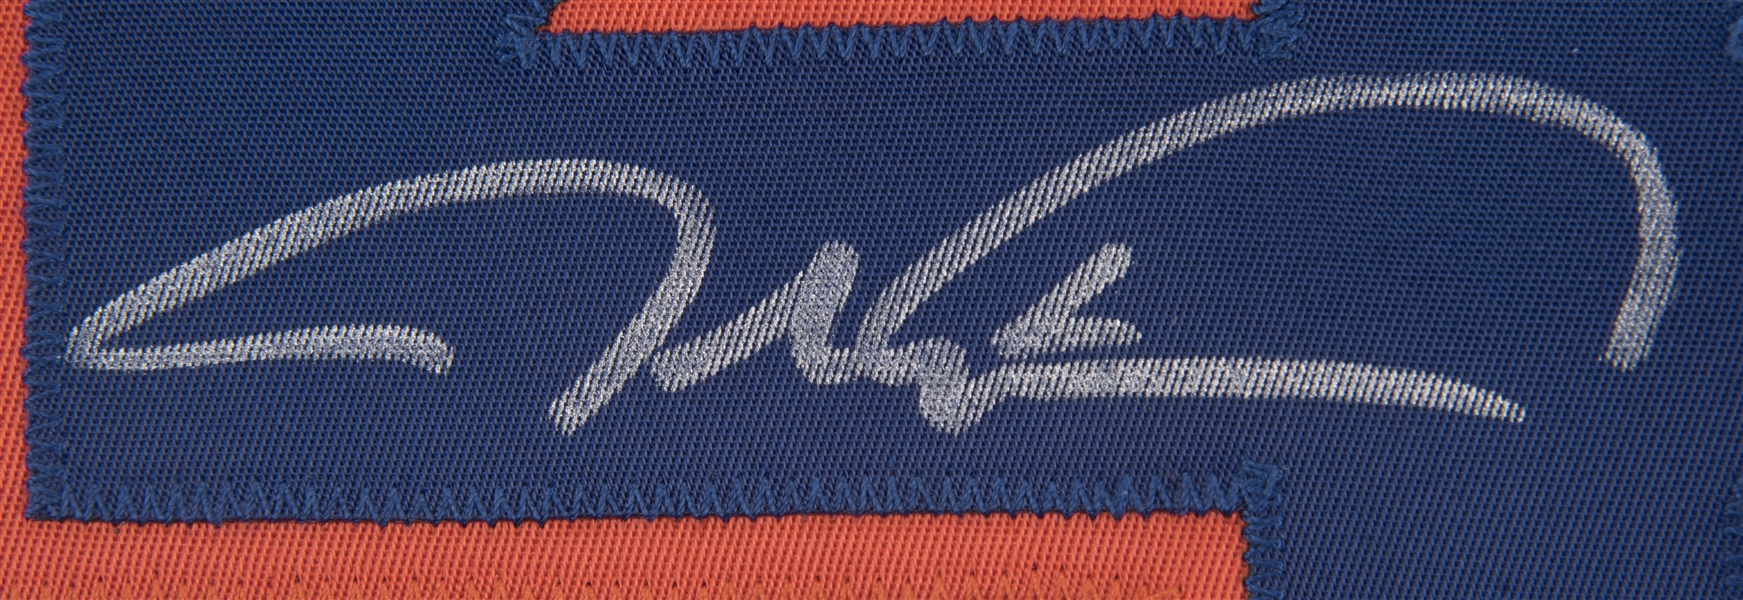 Jacob Degrom New York Mets Autograph Signed Custom Framed Jersey Grey –  MisterMancave